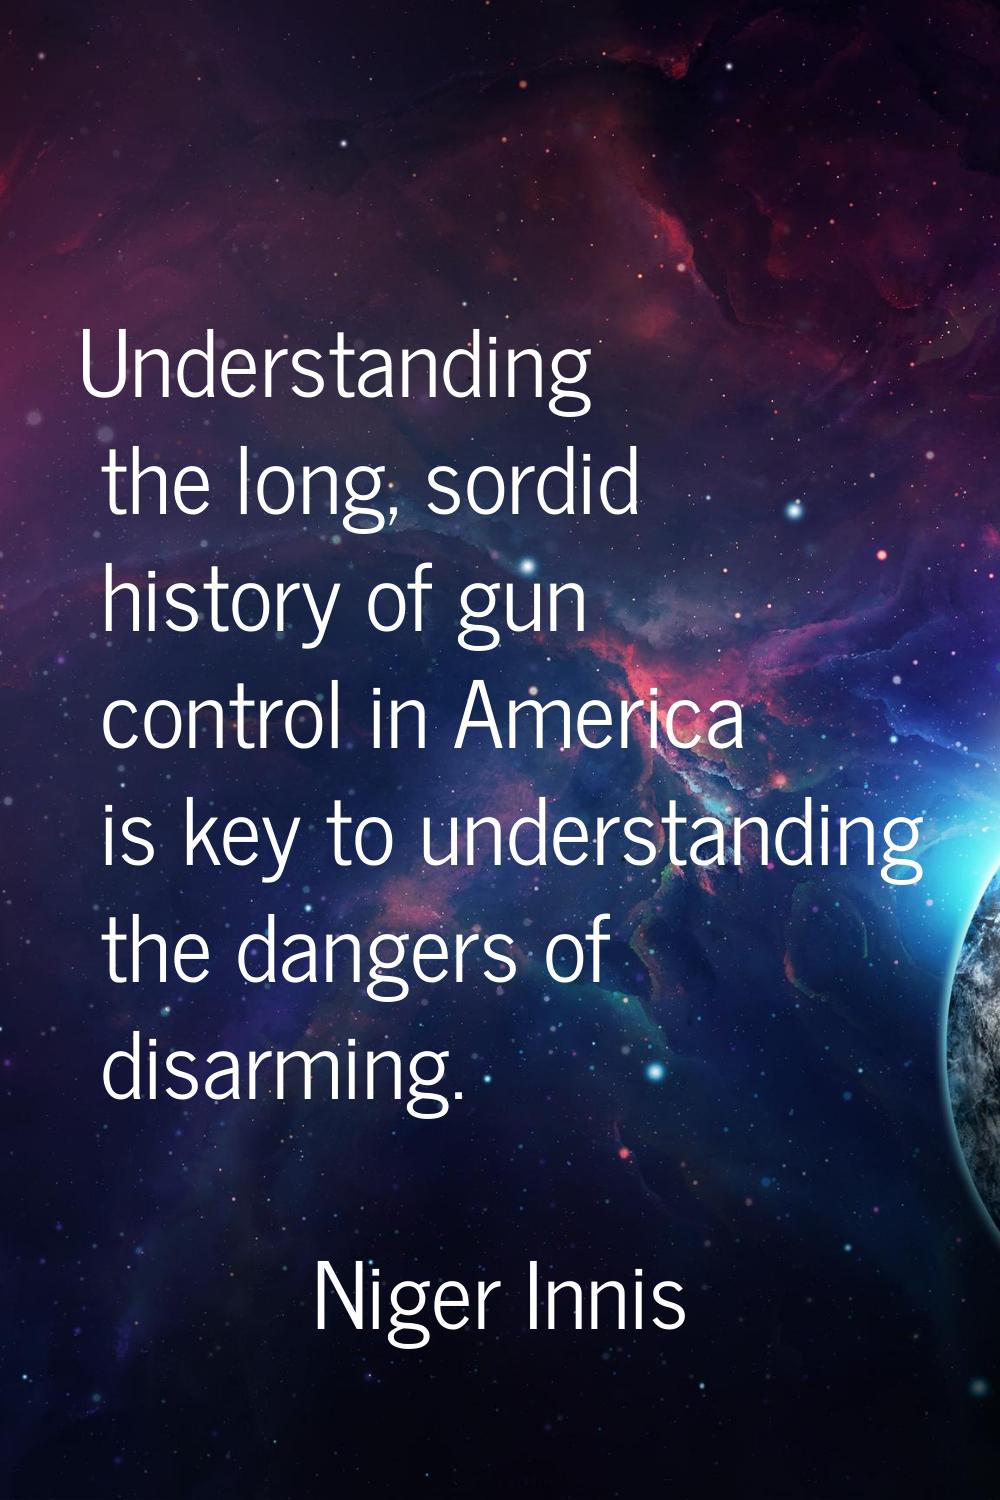 Understanding the long, sordid history of gun control in America is key to understanding the danger